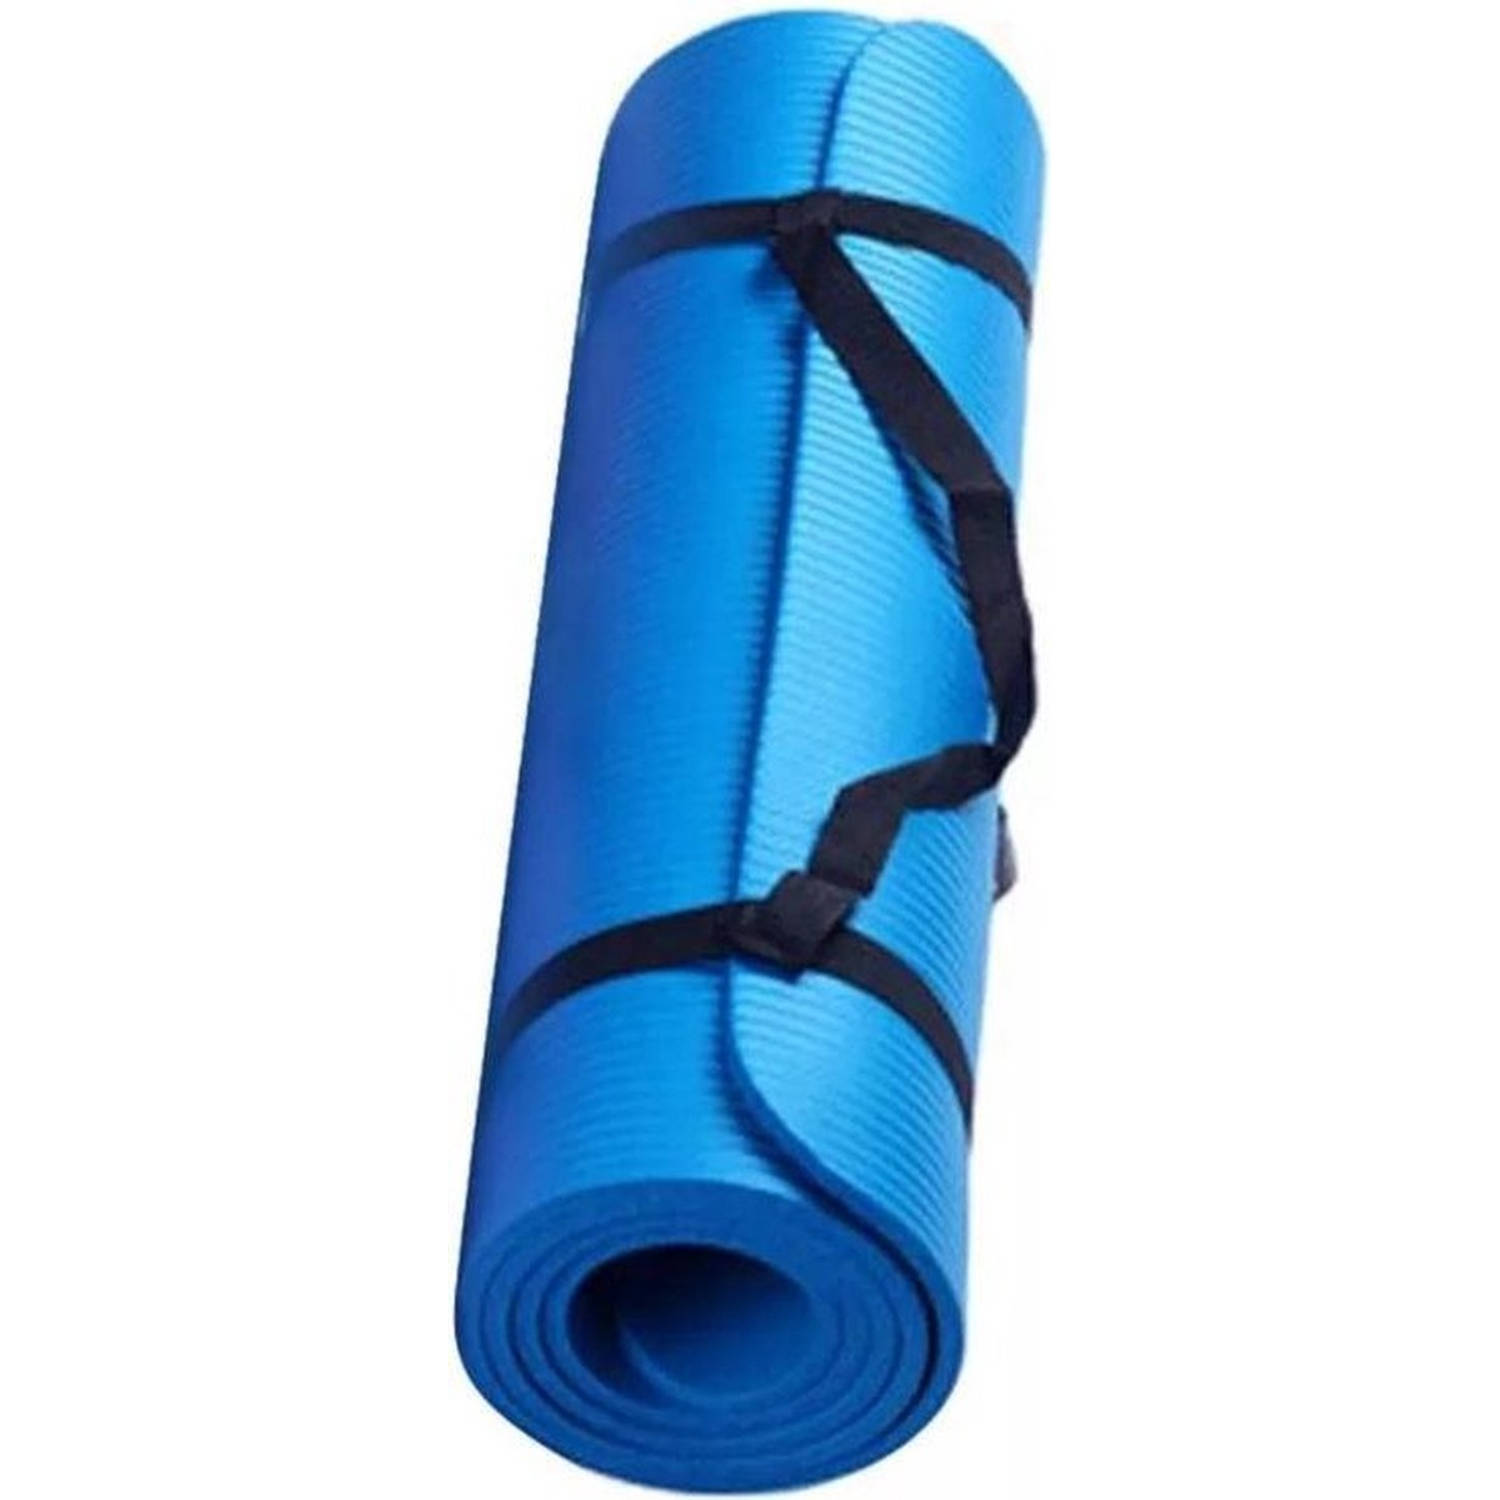 Universele Yogamat - Roze - 173 x 58 x 0.7 cm - Fitnessmat - Yogamat - Lichtblauw